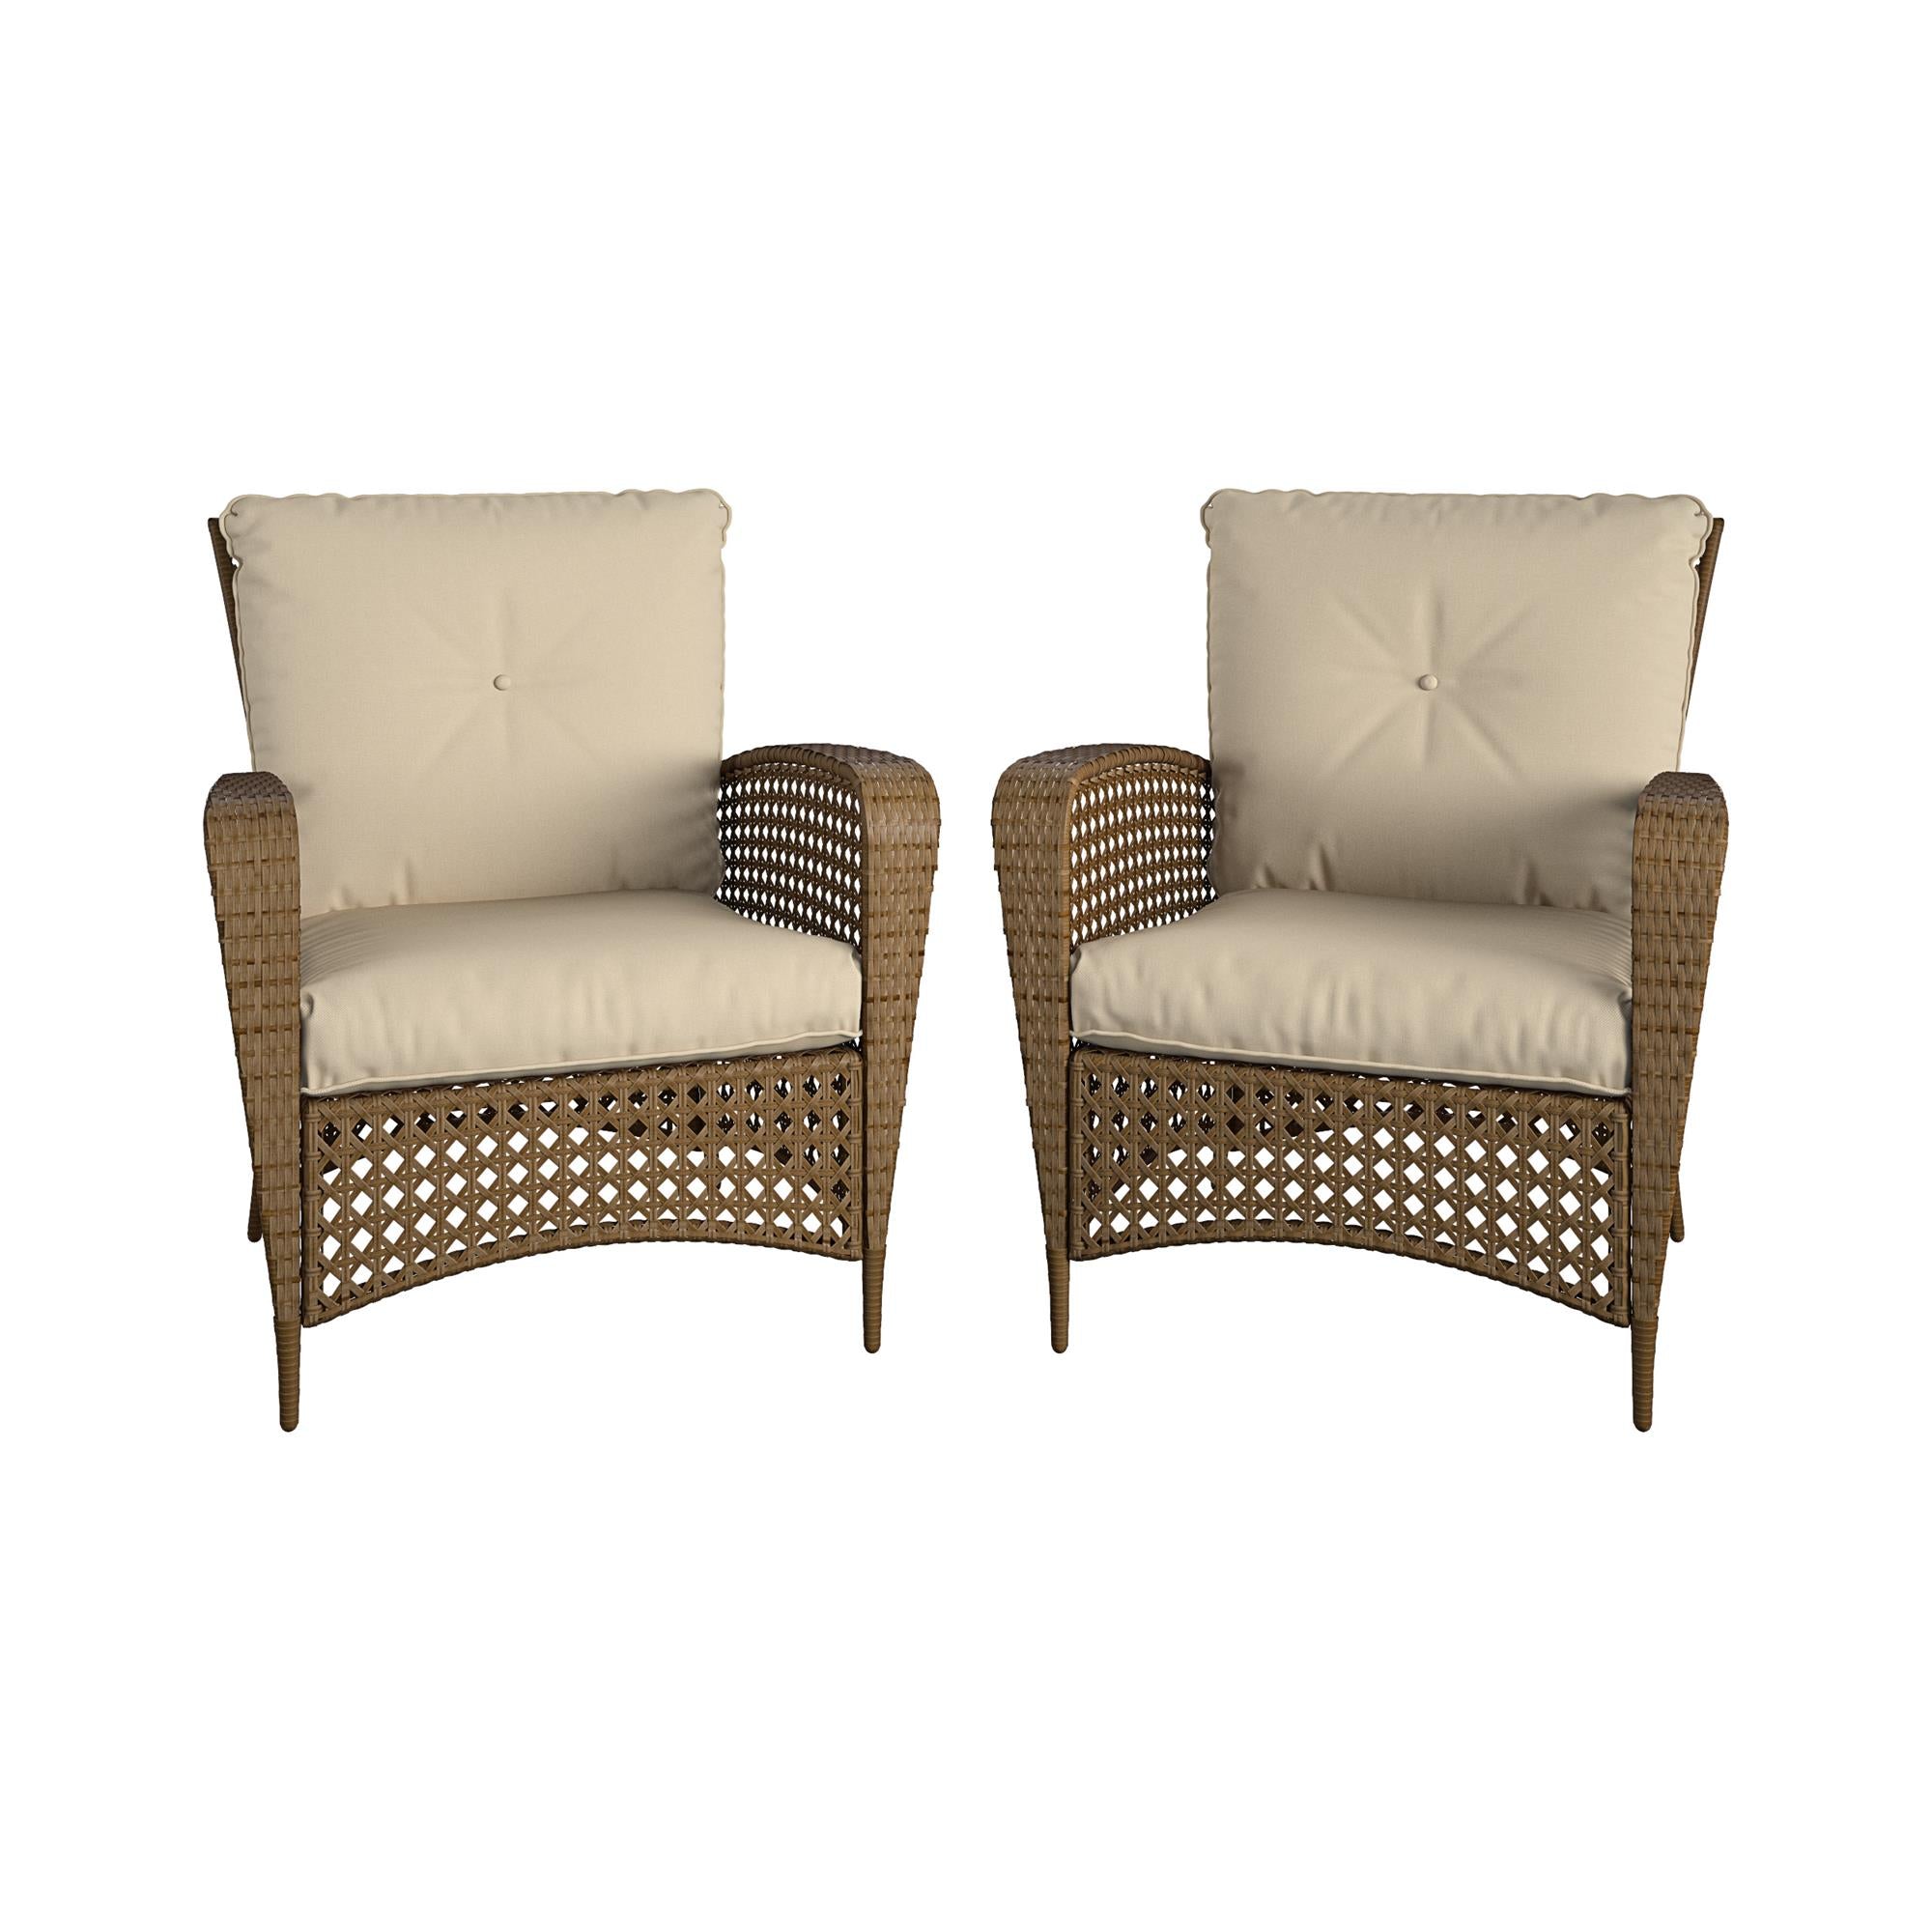 Lakewood Ranch Steel Woven Wicker Lounge Chairs - Tan - N/A